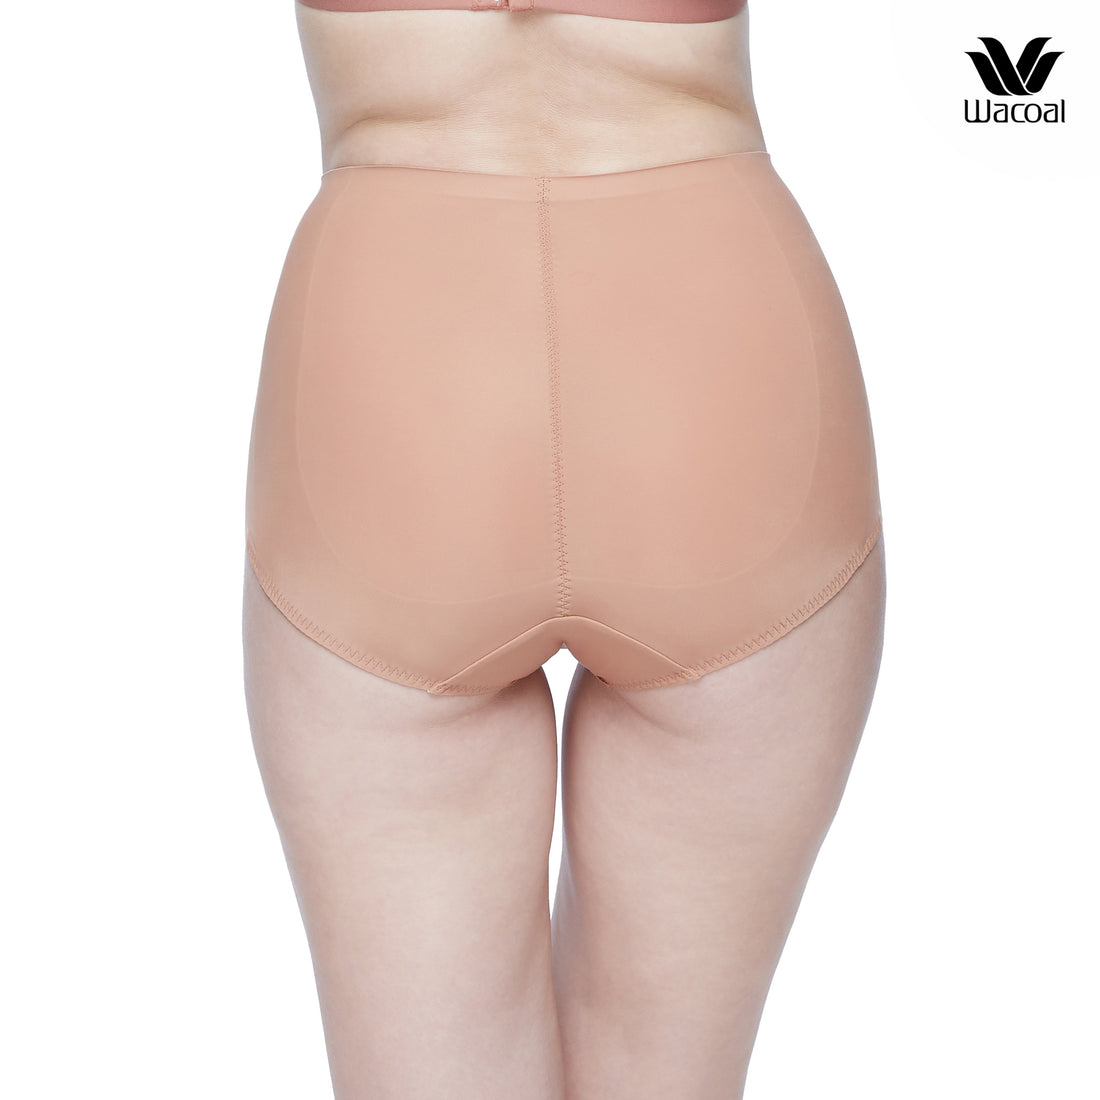 Wacoal Shape Beautifier Hips compression pants, model WY1616, brick orange (BN)